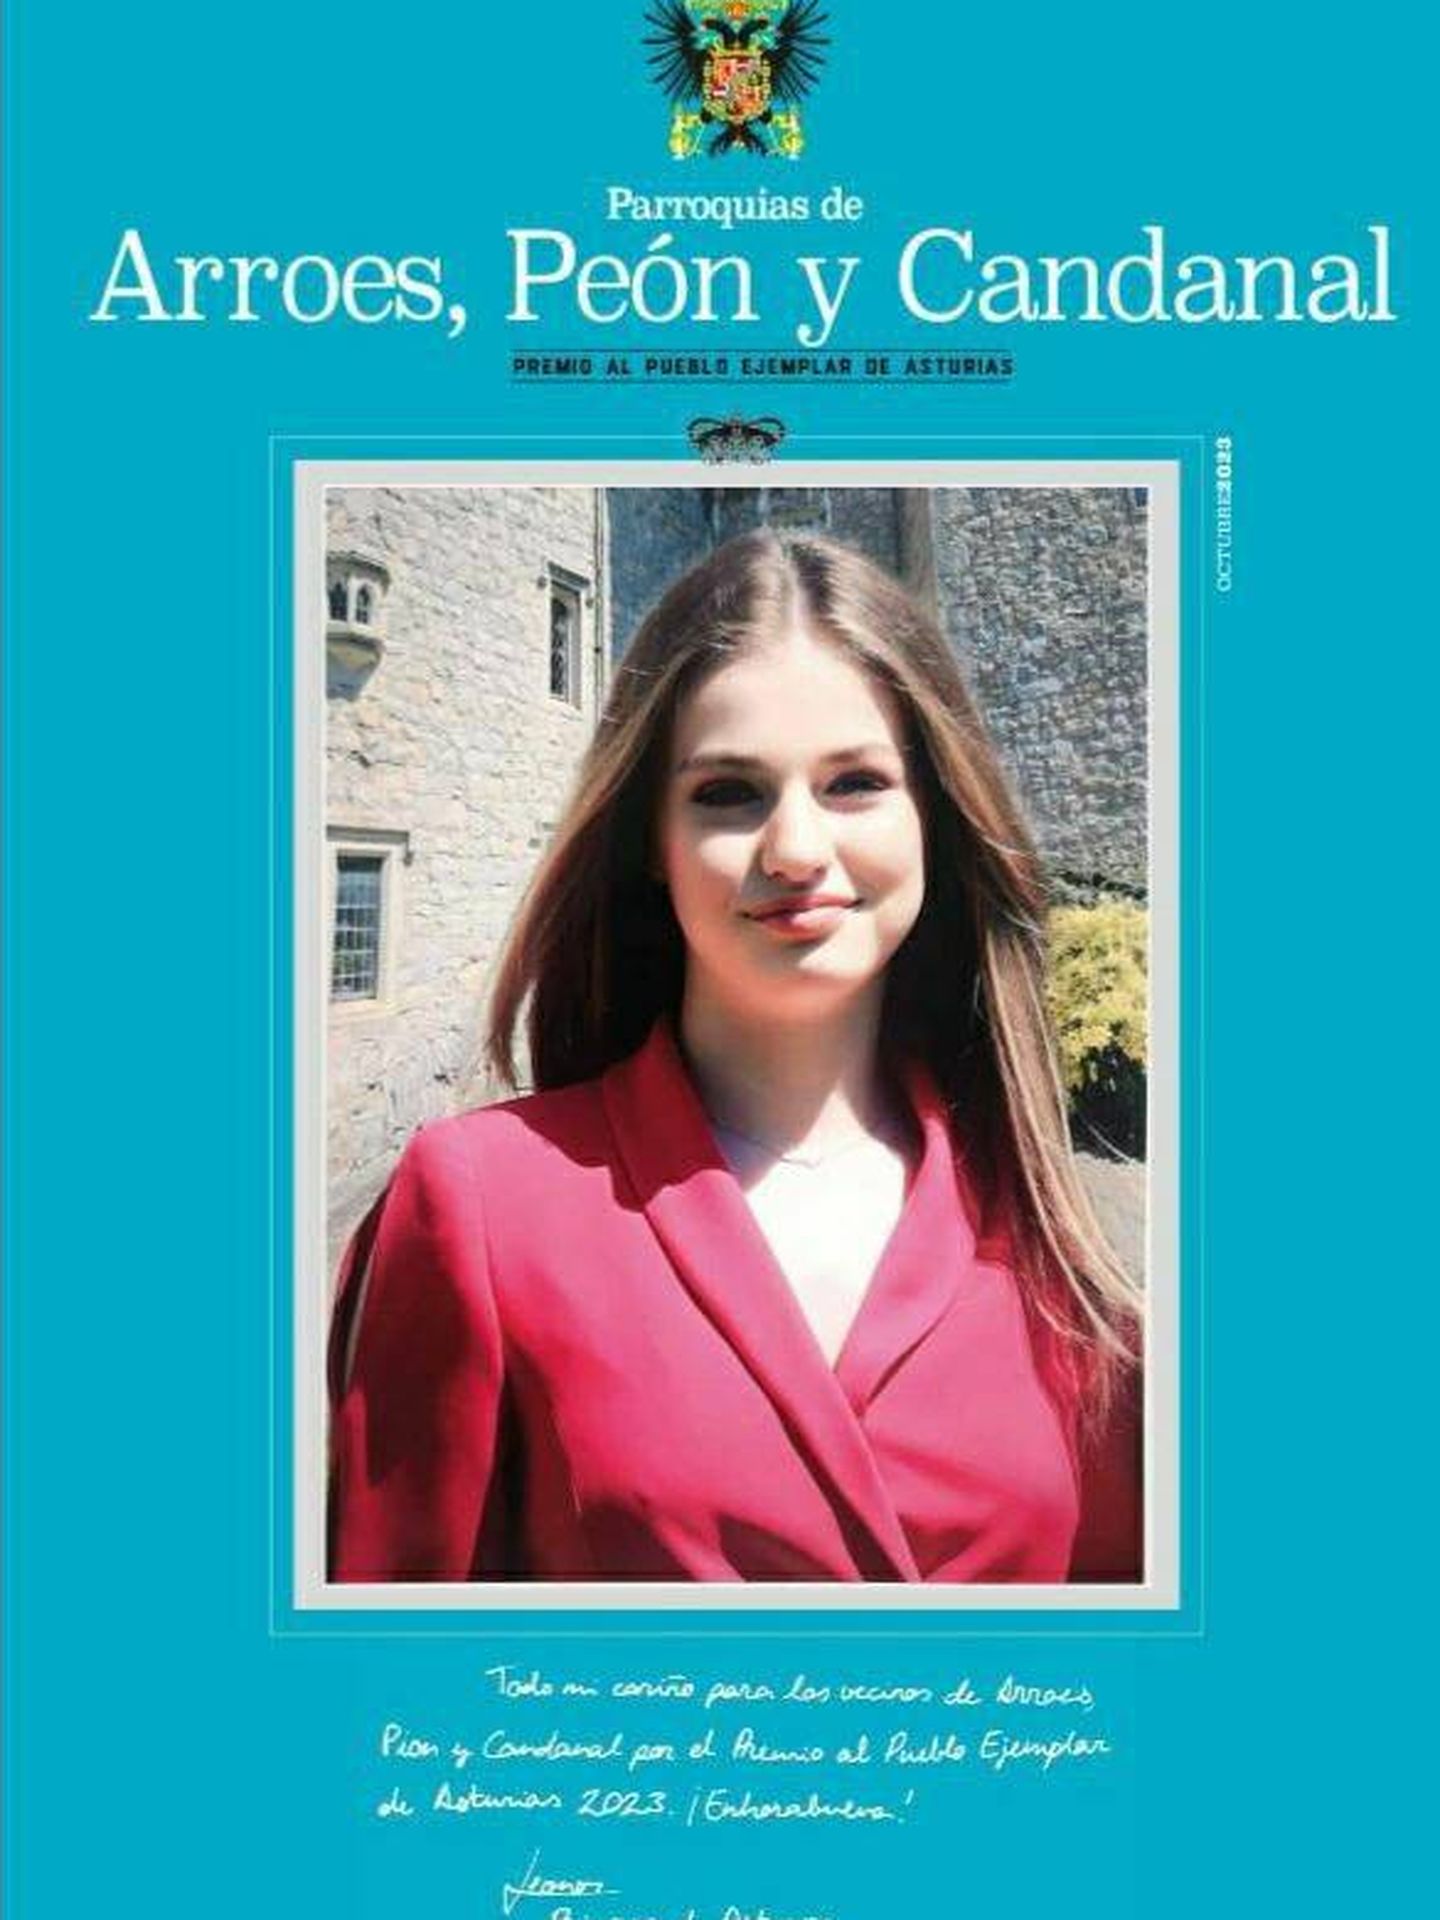 La princesa Leonor, portada de revista.